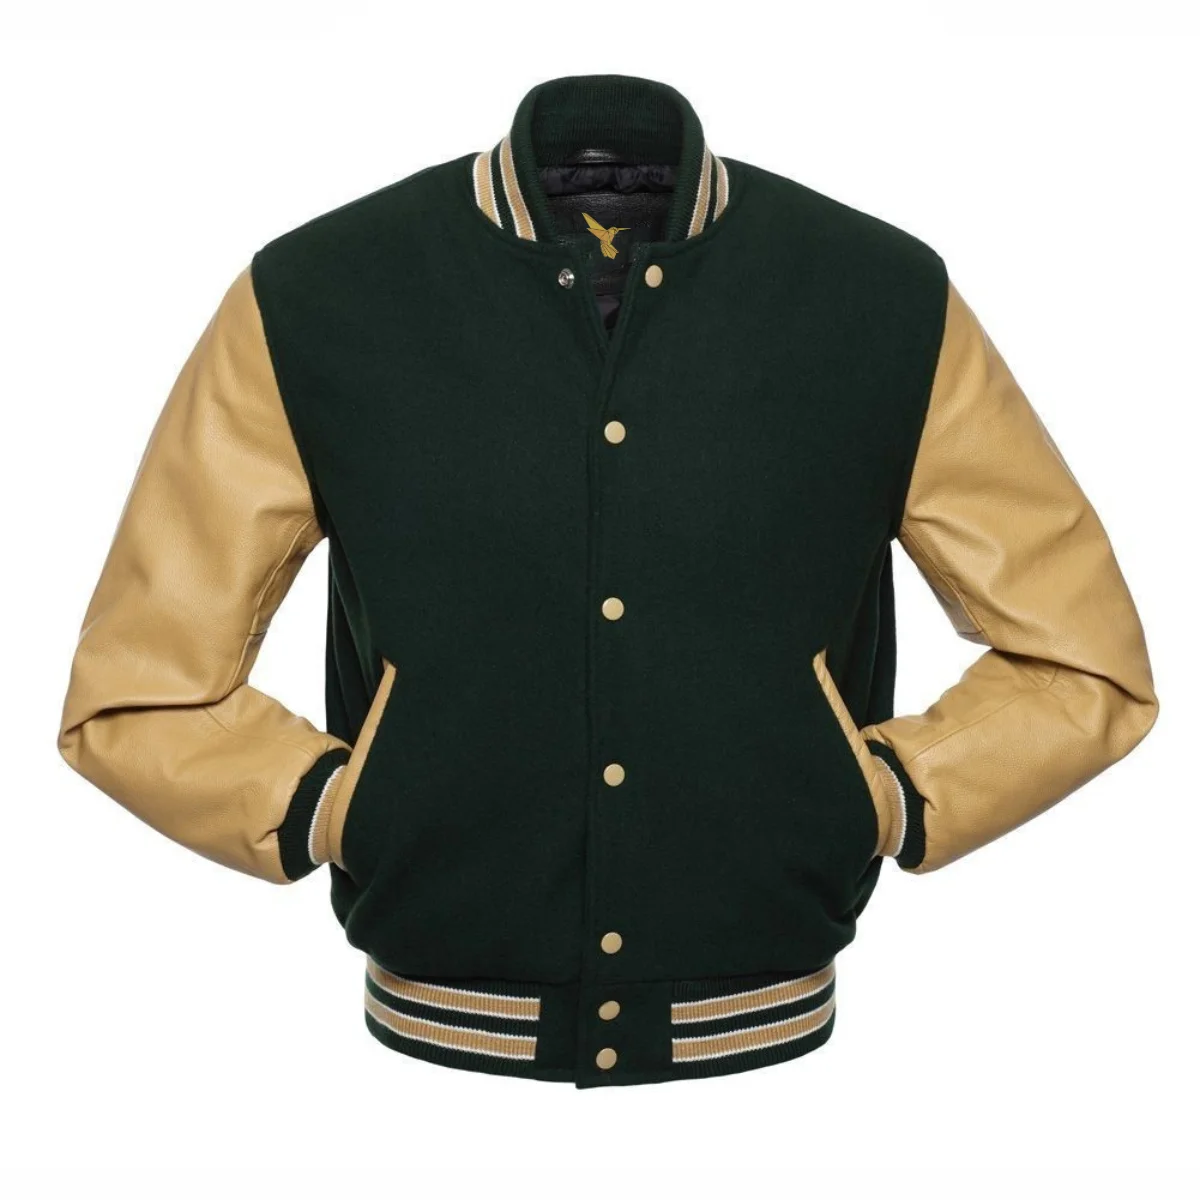 Front Image of Green Varsity Jacket